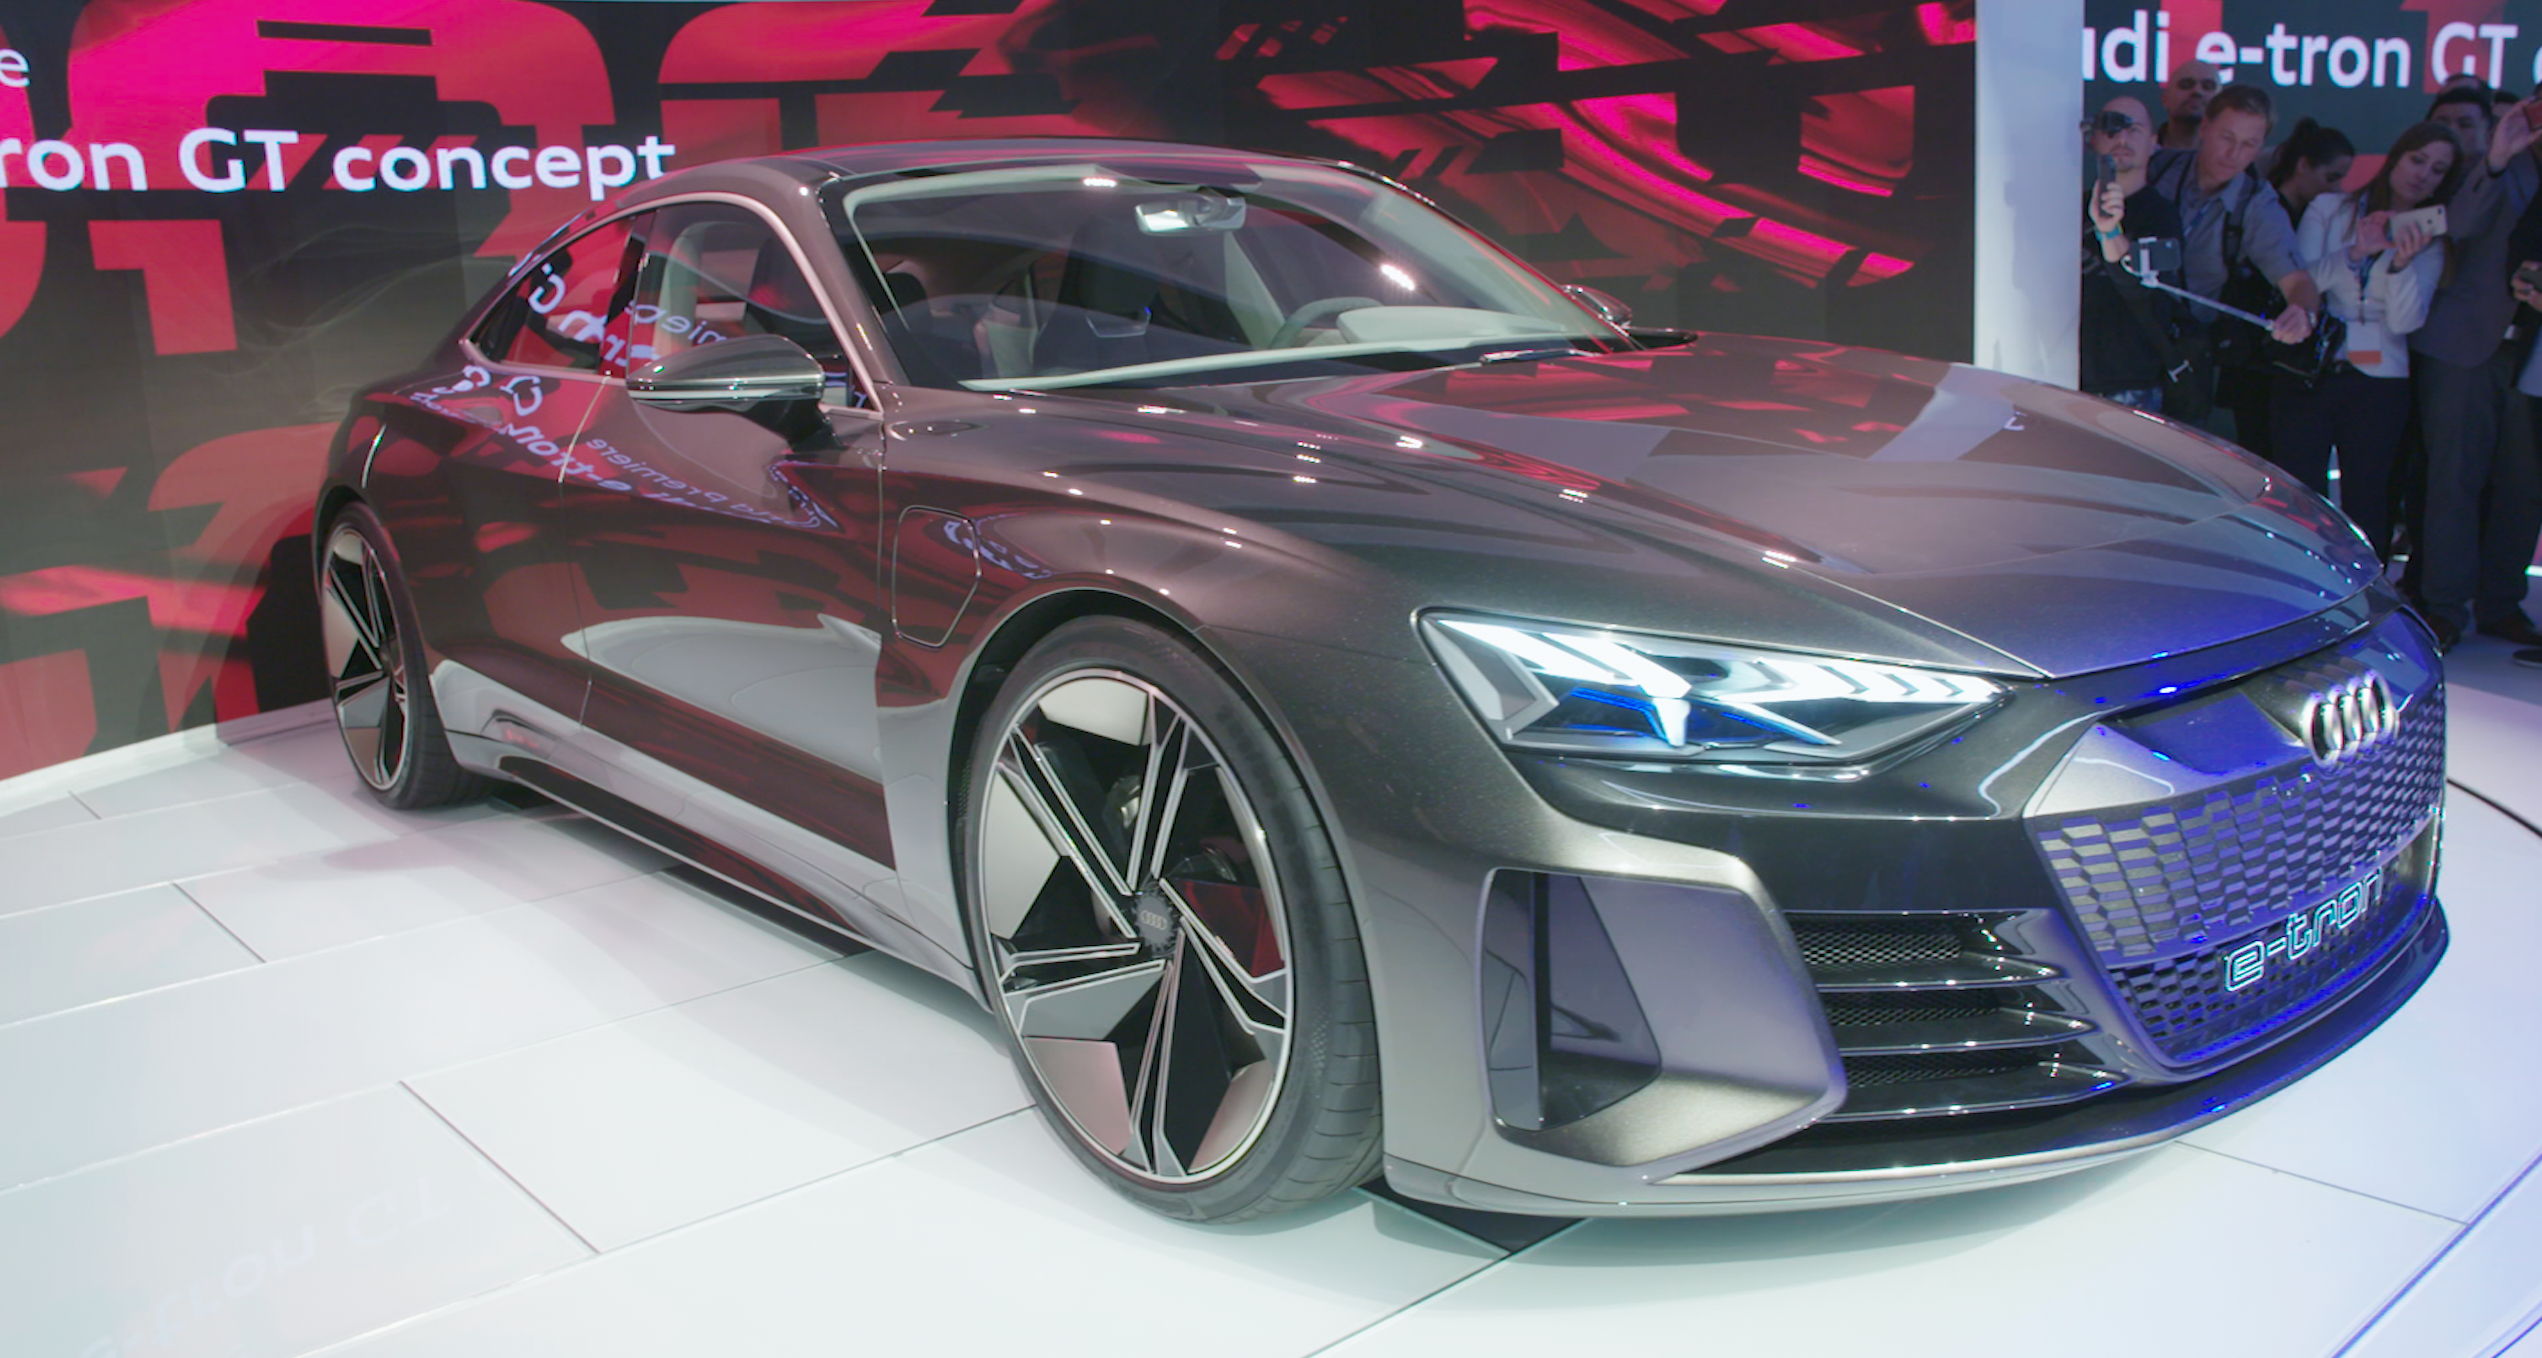 Doen Doe het niet vervoer Audi shows off its electric future in the E-Tron GT concept - CNN Video